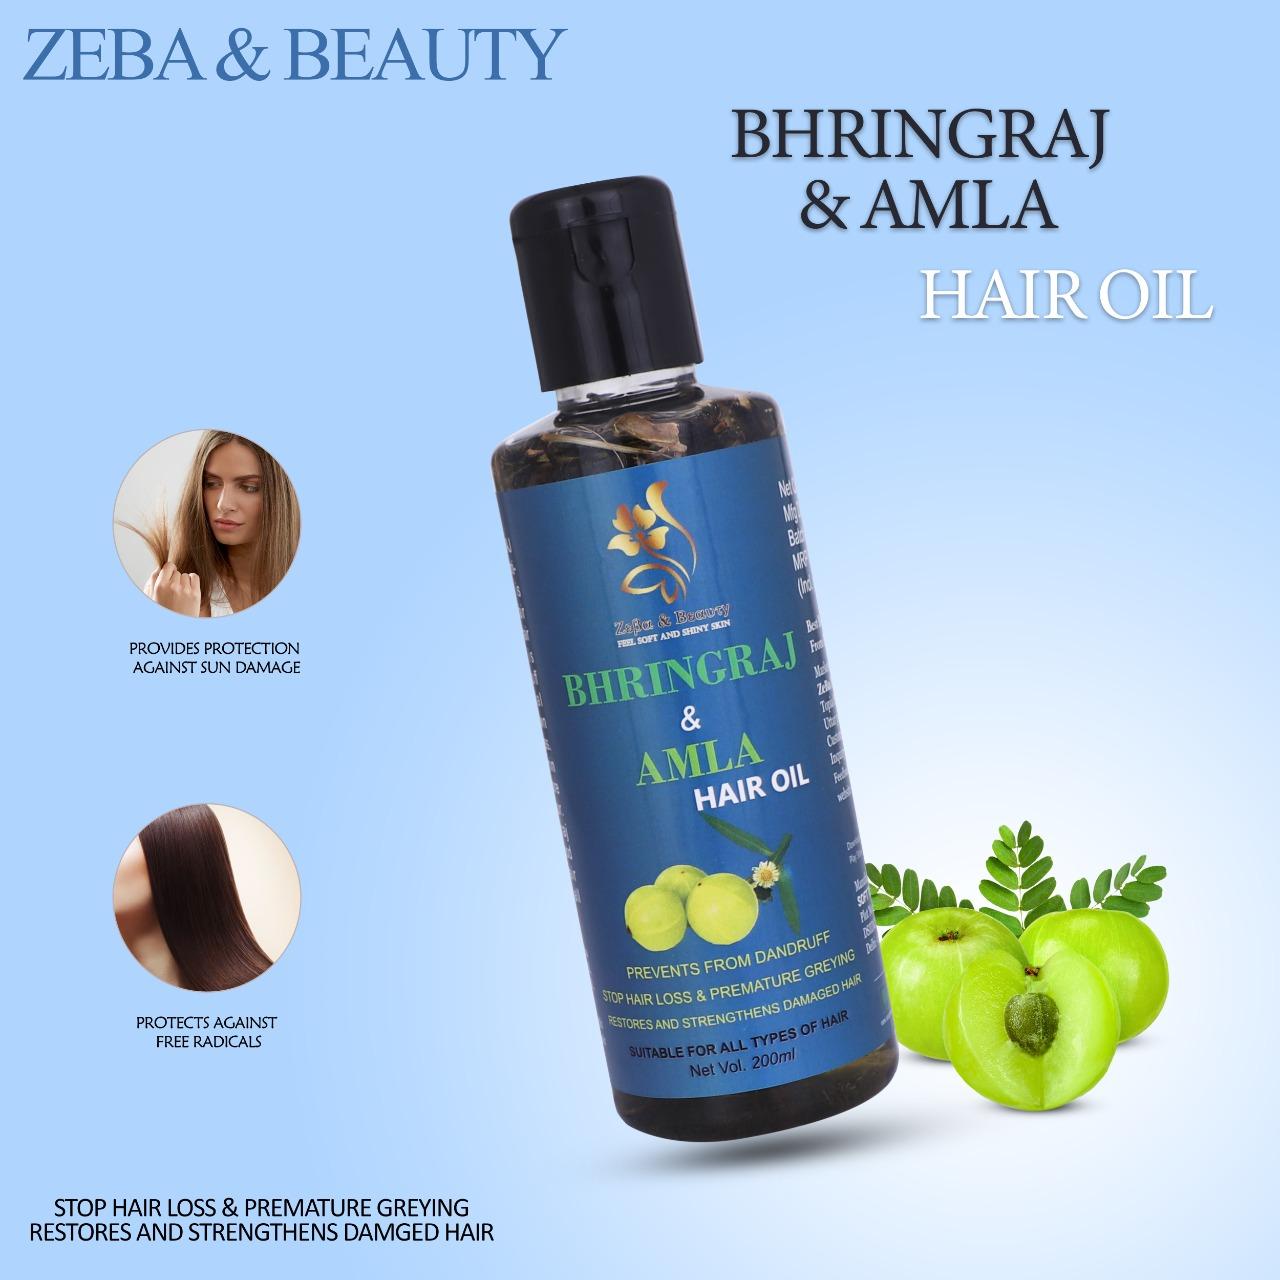 ZEBA & BEAUTY Bhirngraj & Amla Hair Oil